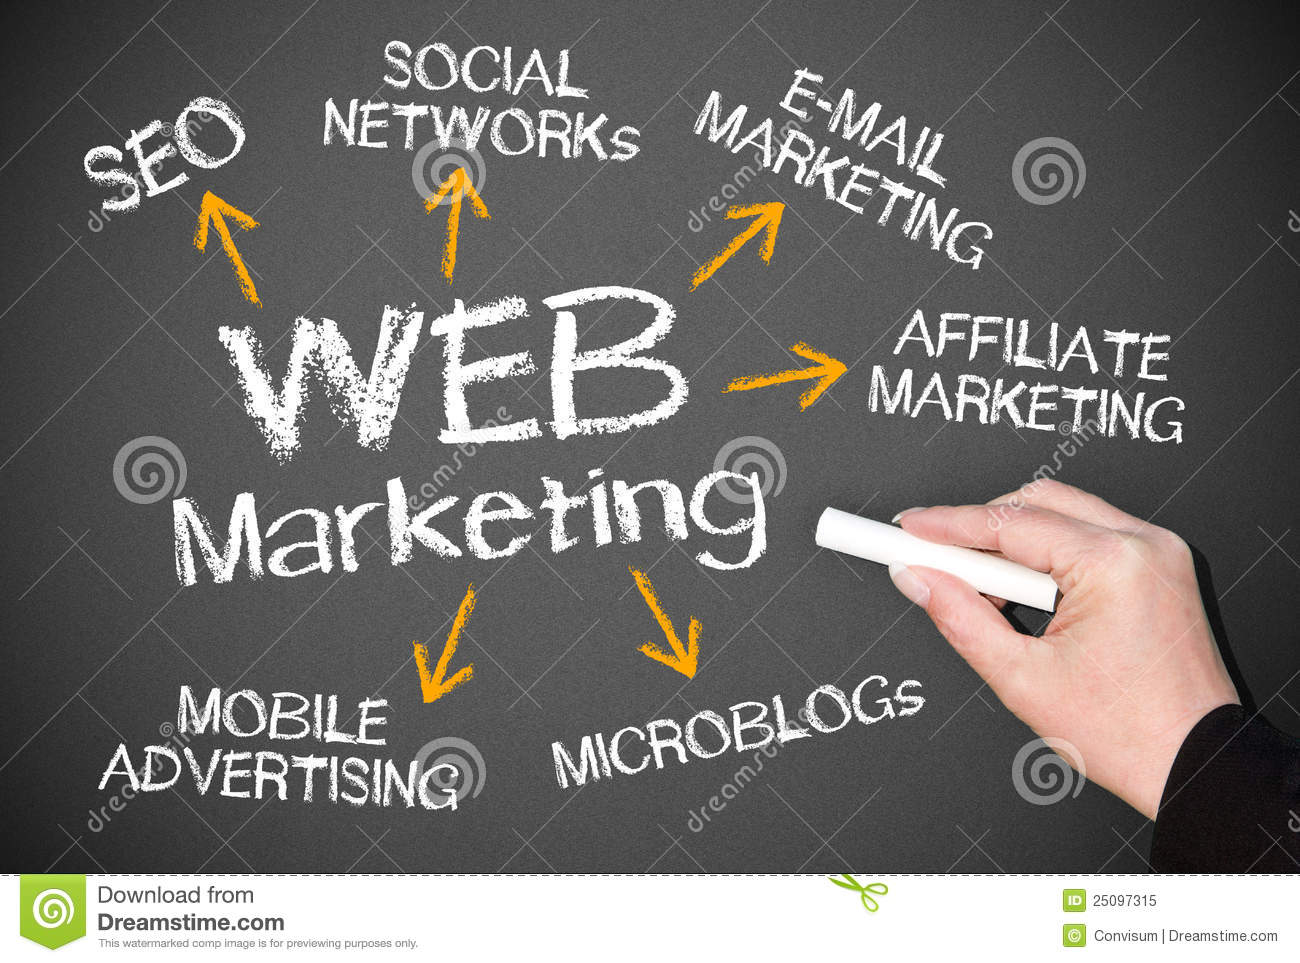 Marketing on the Web